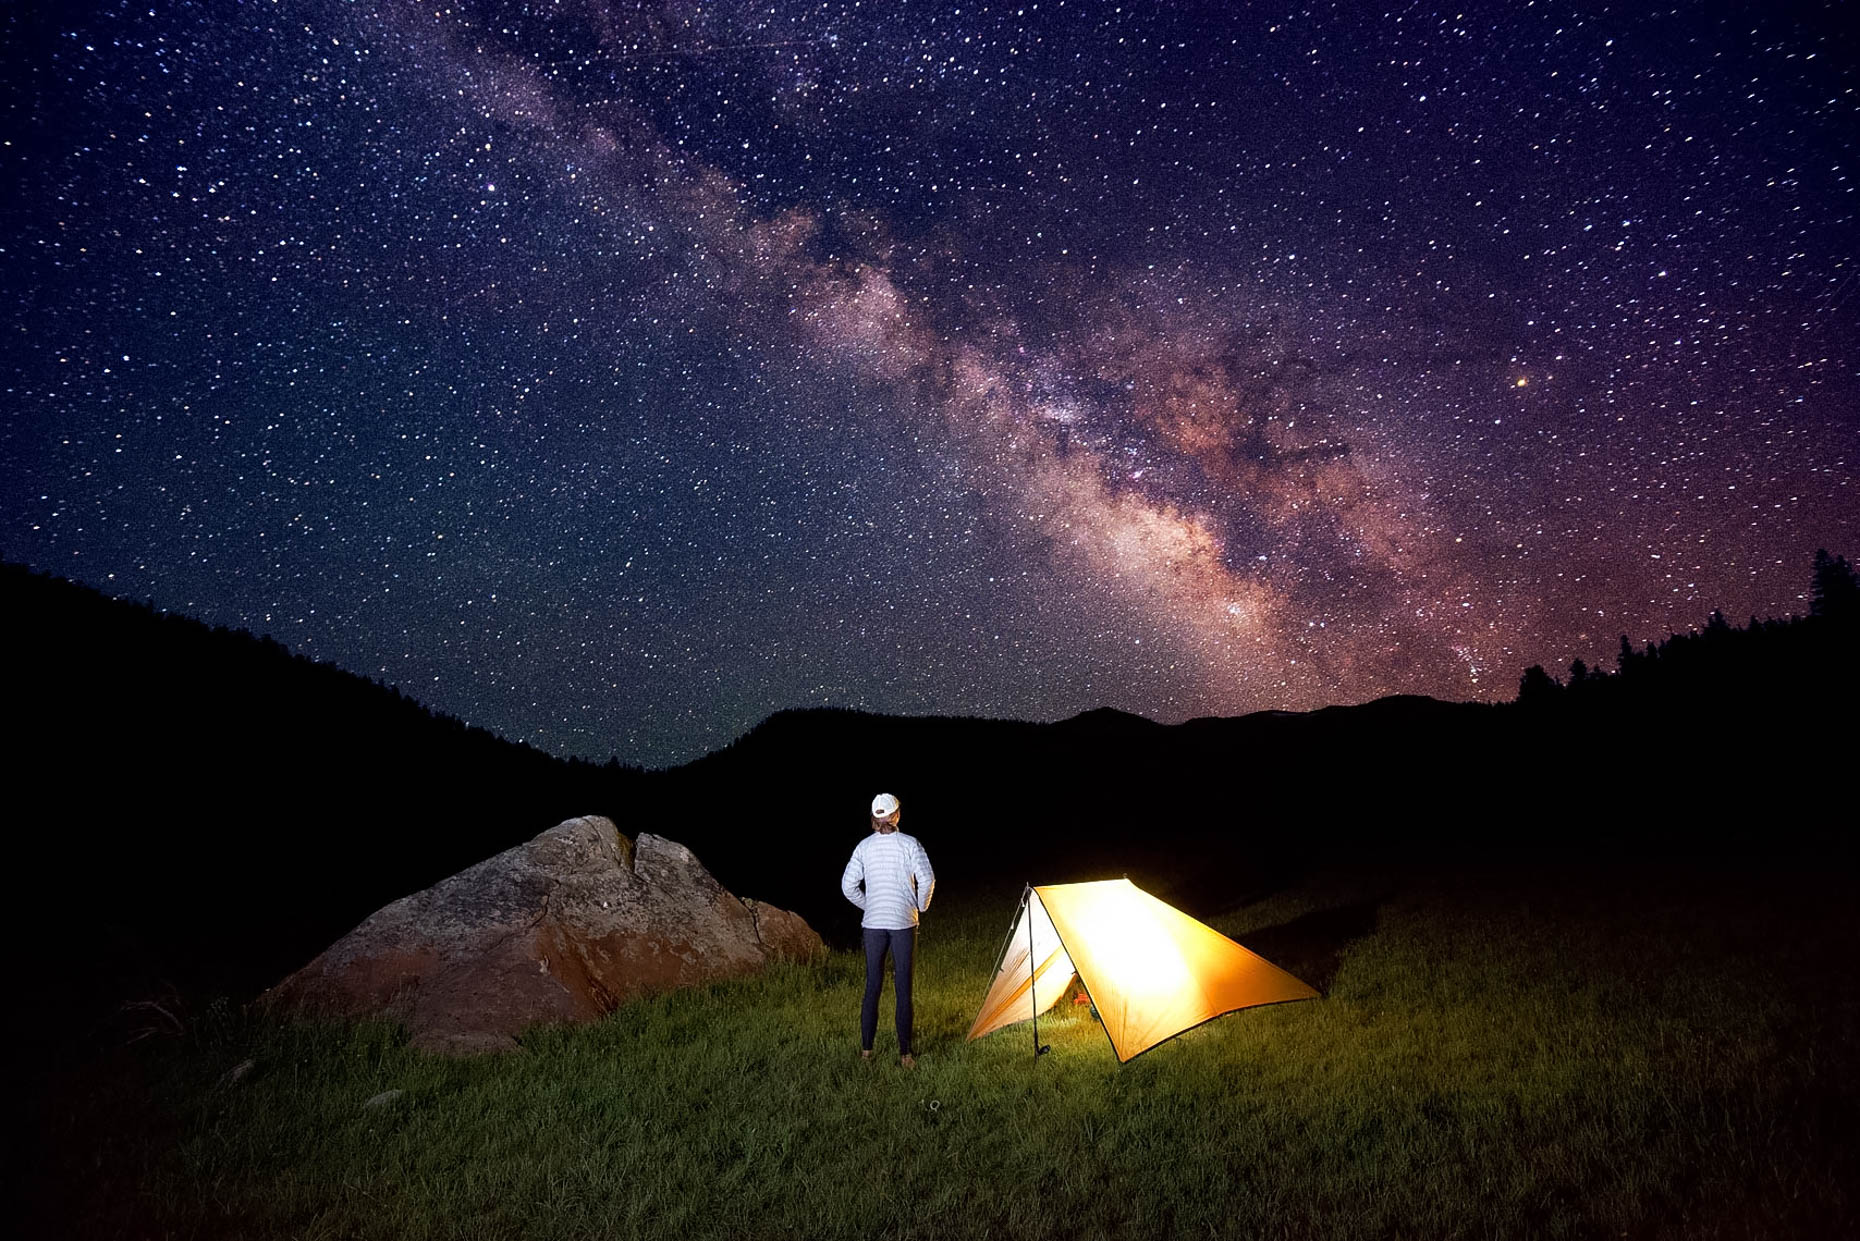 Tahoe Rim Trail Night Camping Under The Milky Way - Lake Tahoe, California